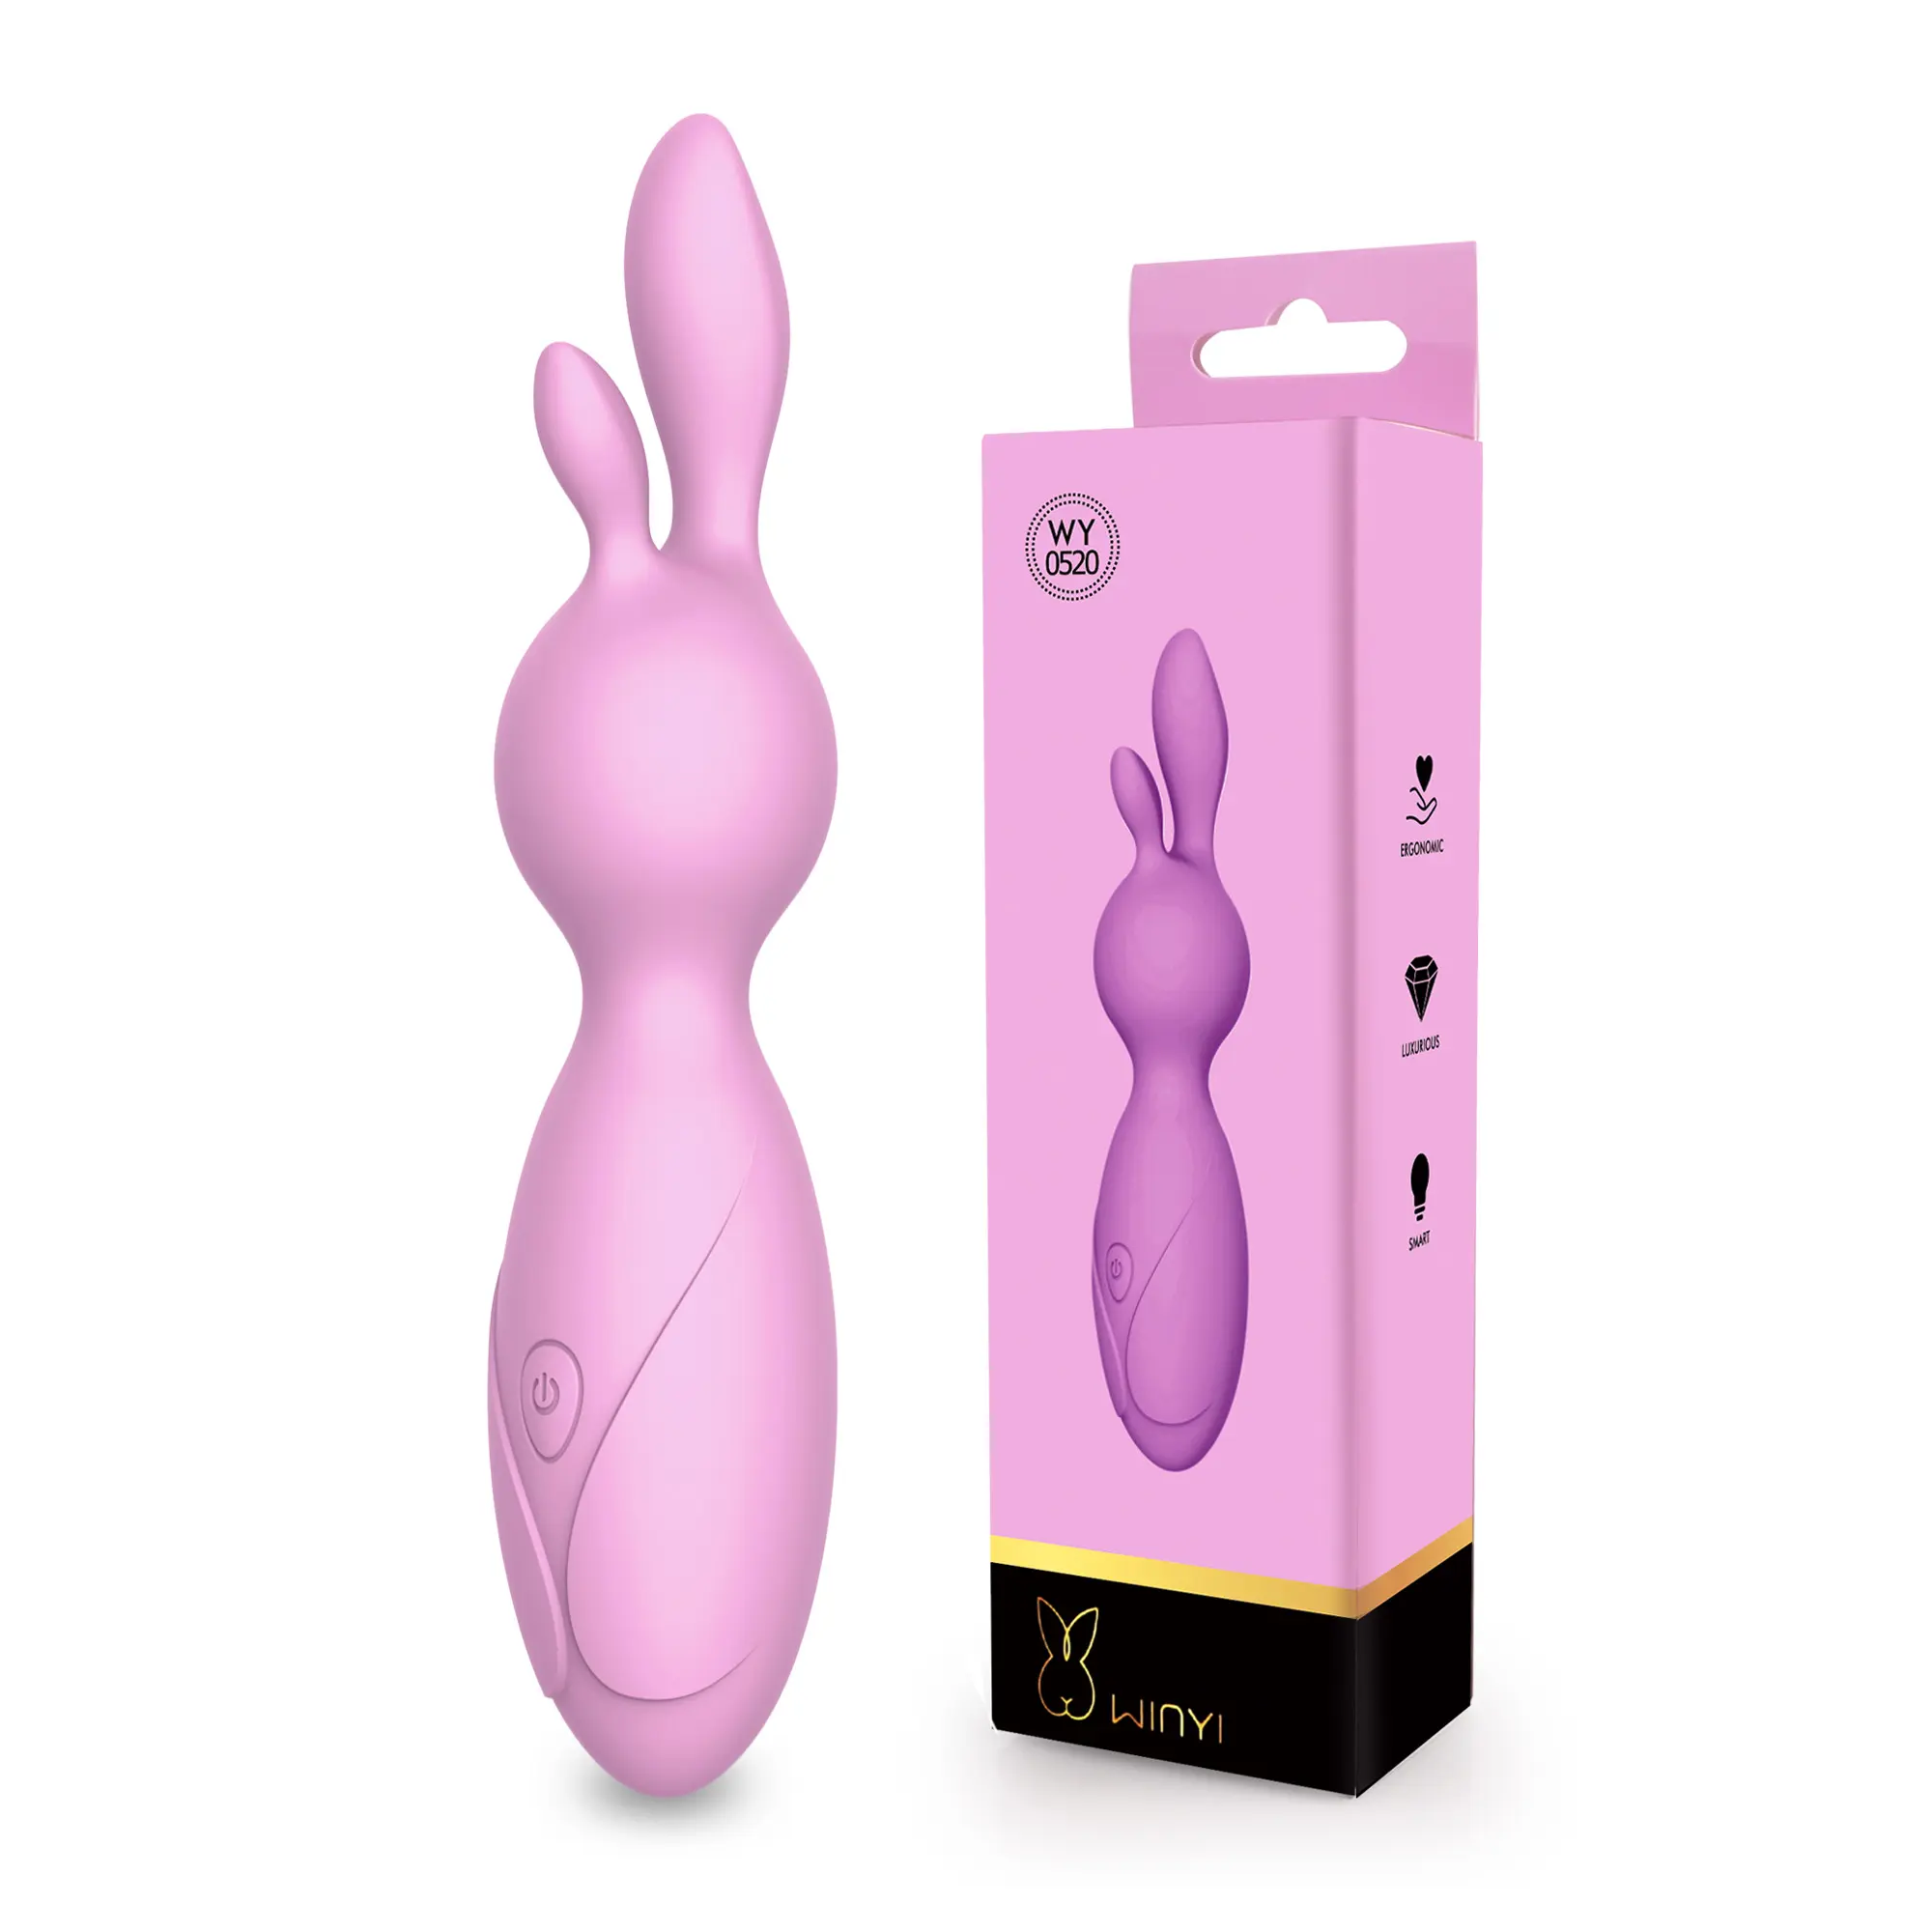 Desain baru Jepang perempuan IPX5 tahan air mainan seks dewasa wanita menggunakan seks silikon kelinci Vibrator dalam produk seks